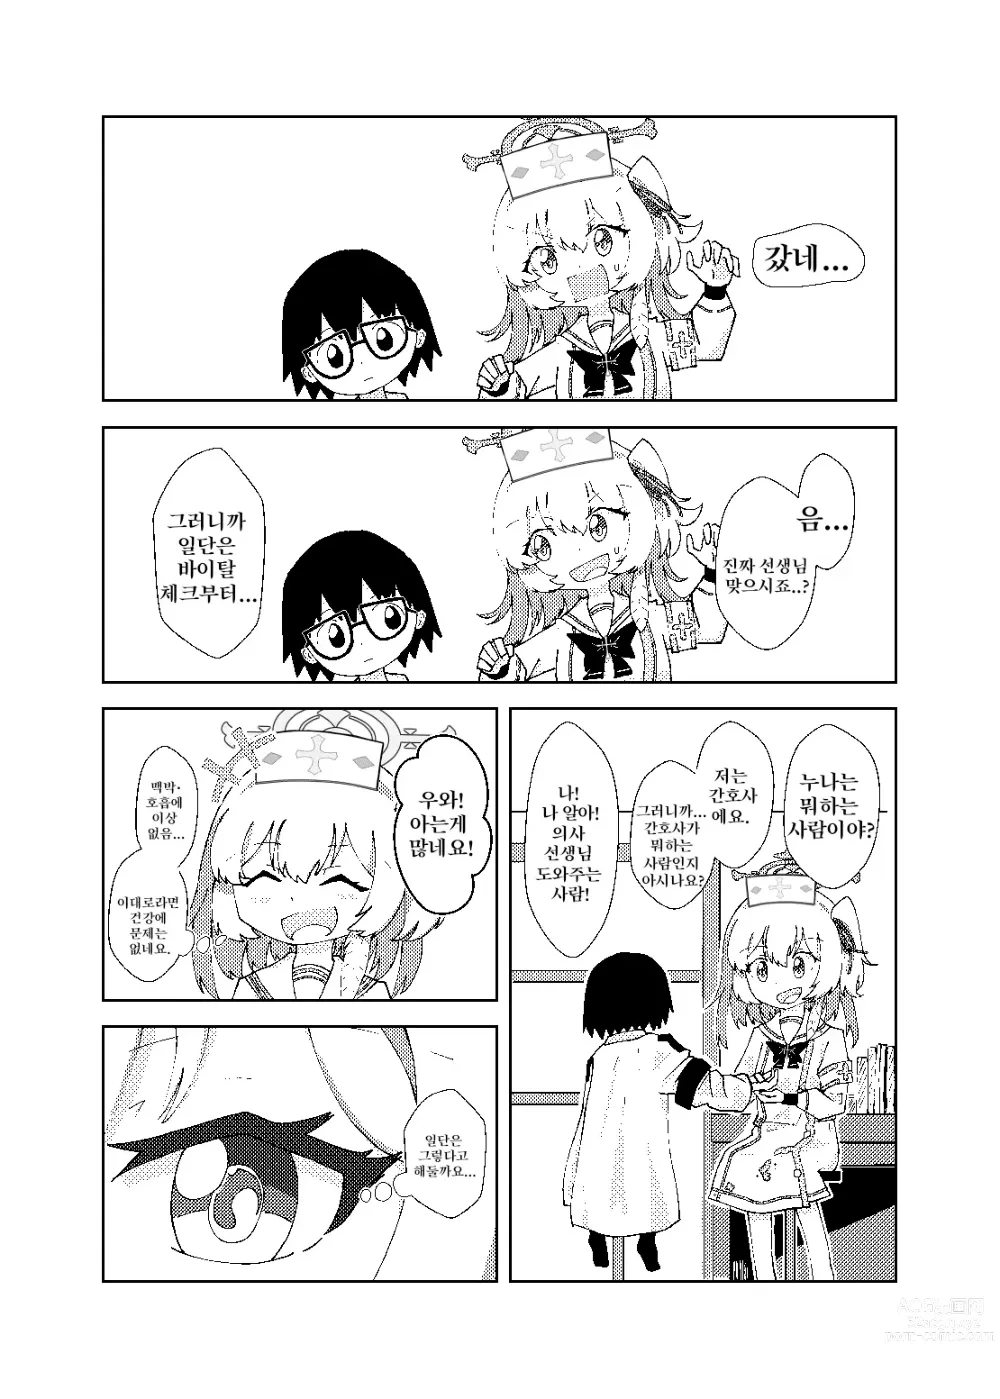 Page 3 of doujinshi 세리나가 유아화 선생님을 간호하는 이야기